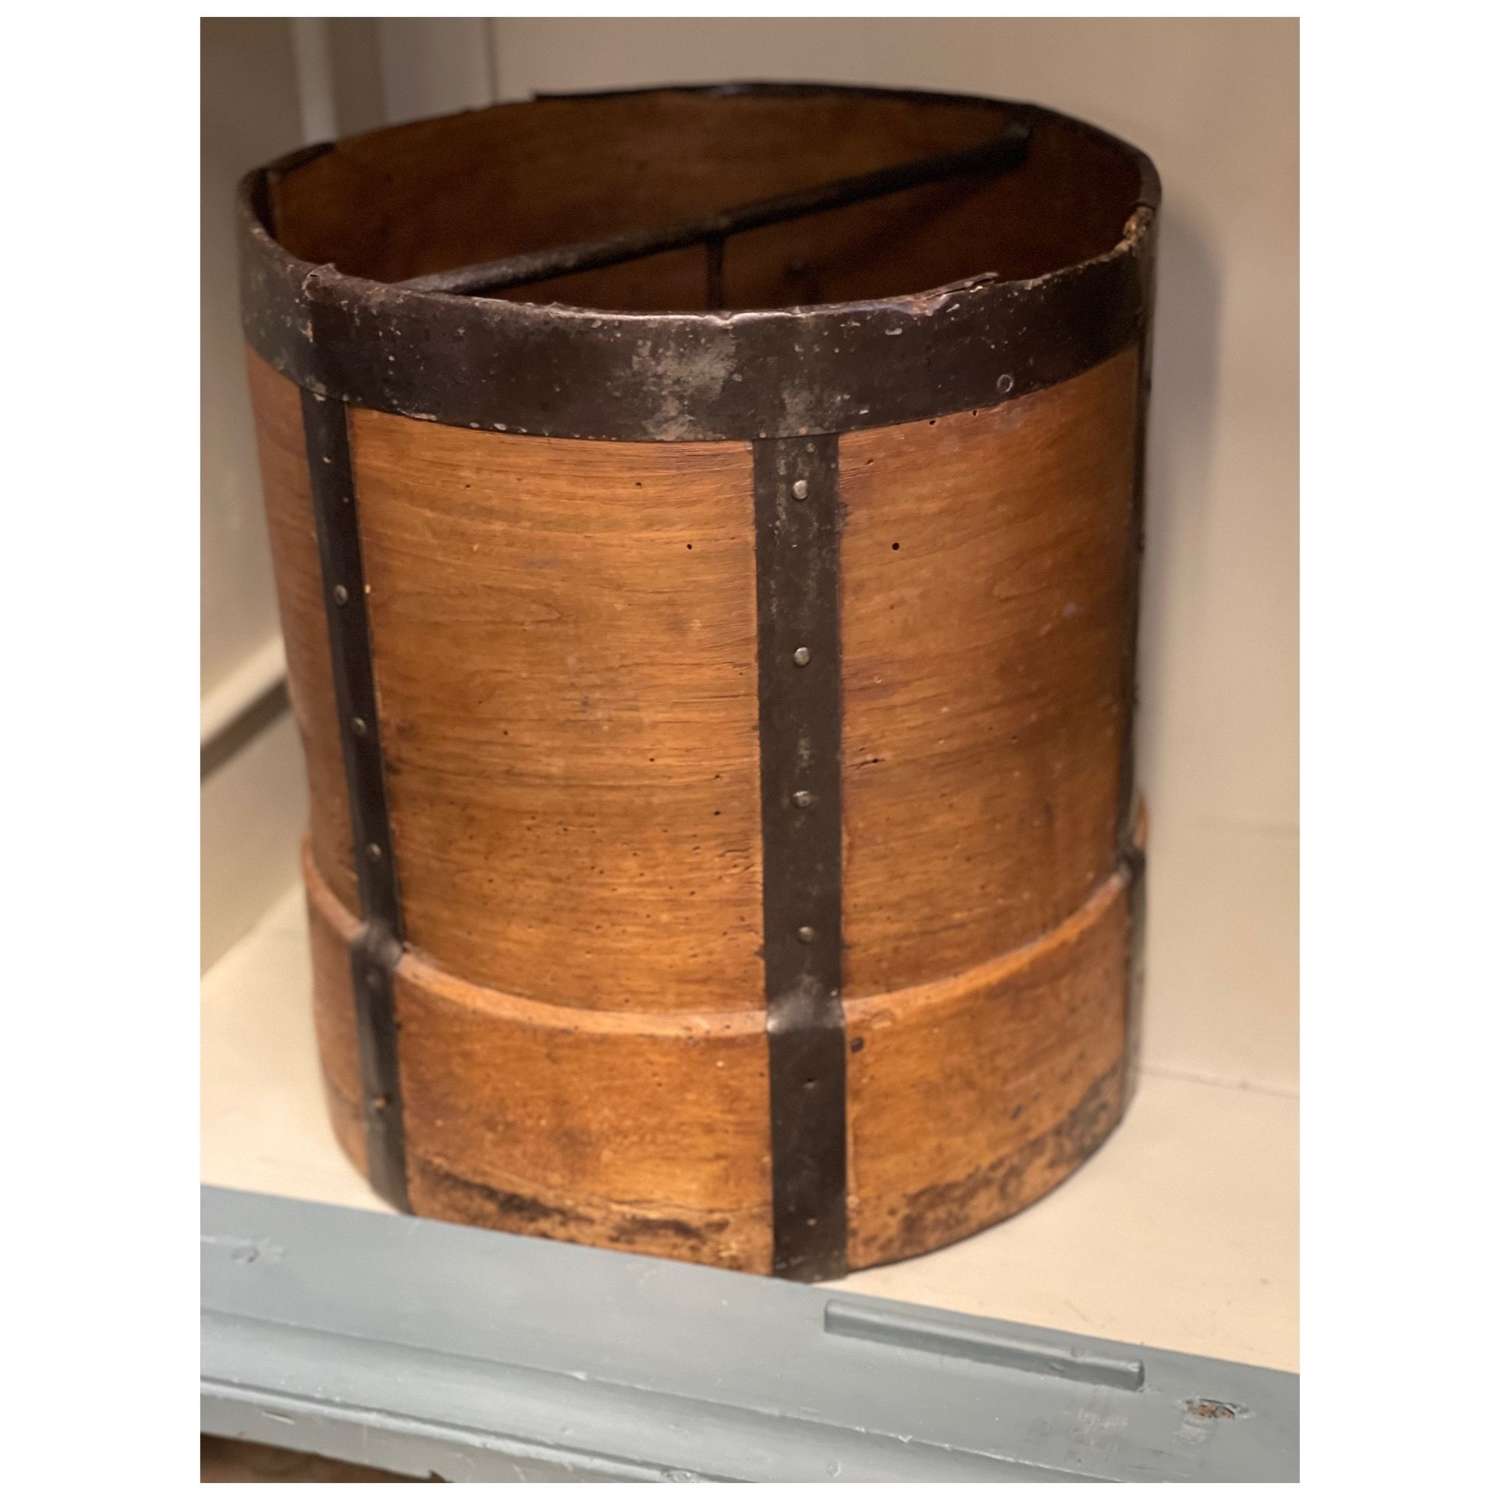 19th century French Walnut and Iron Grain Measure Bucket